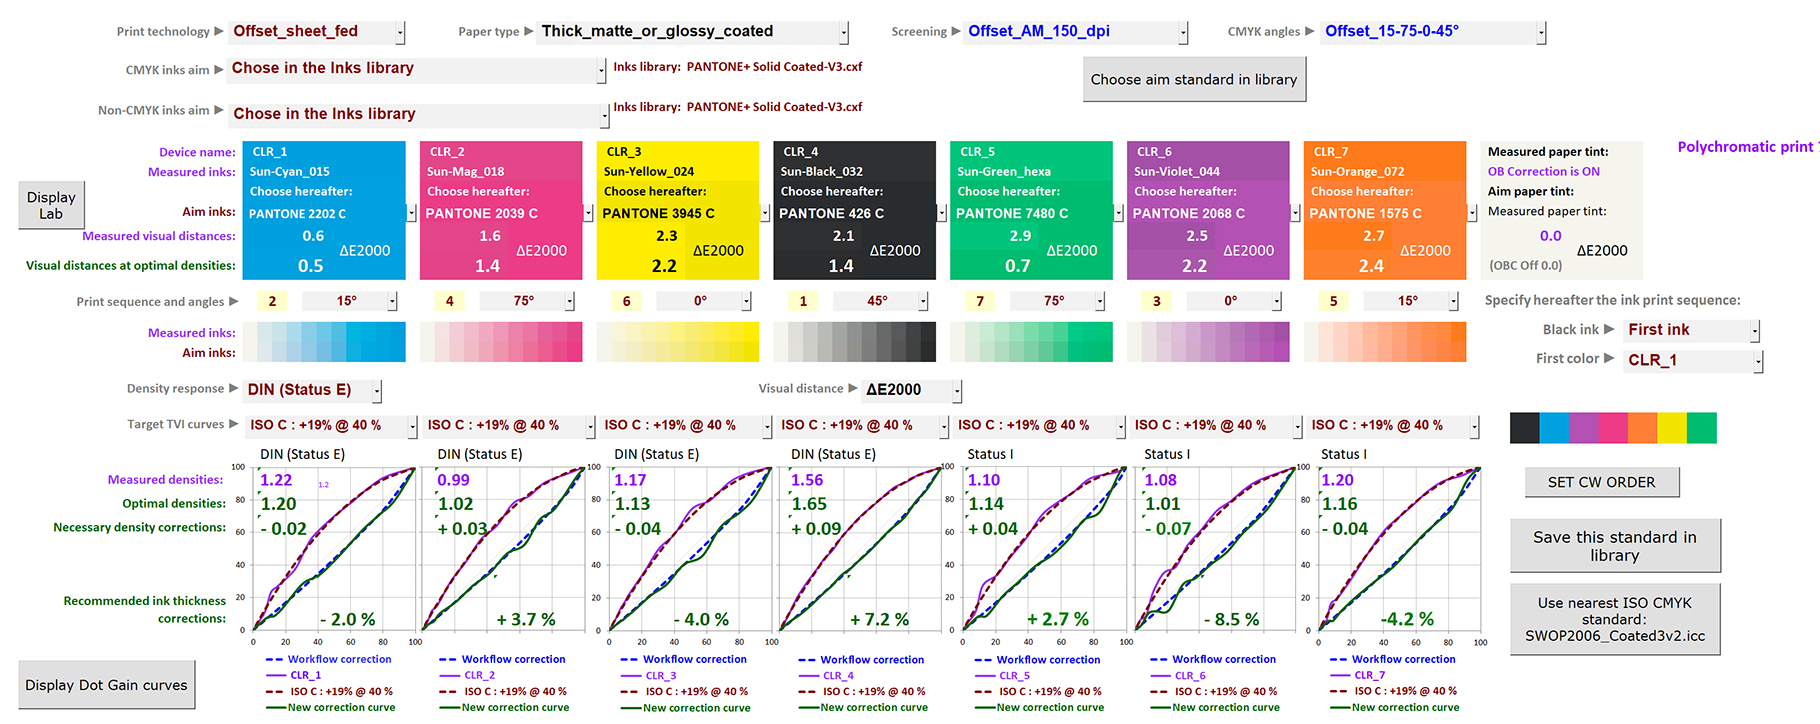 Computing seven optimal print form correction curves for matching a seven colors CMYK + Green + Violet + Orange print standard, using Colorsource MagicPrepress application